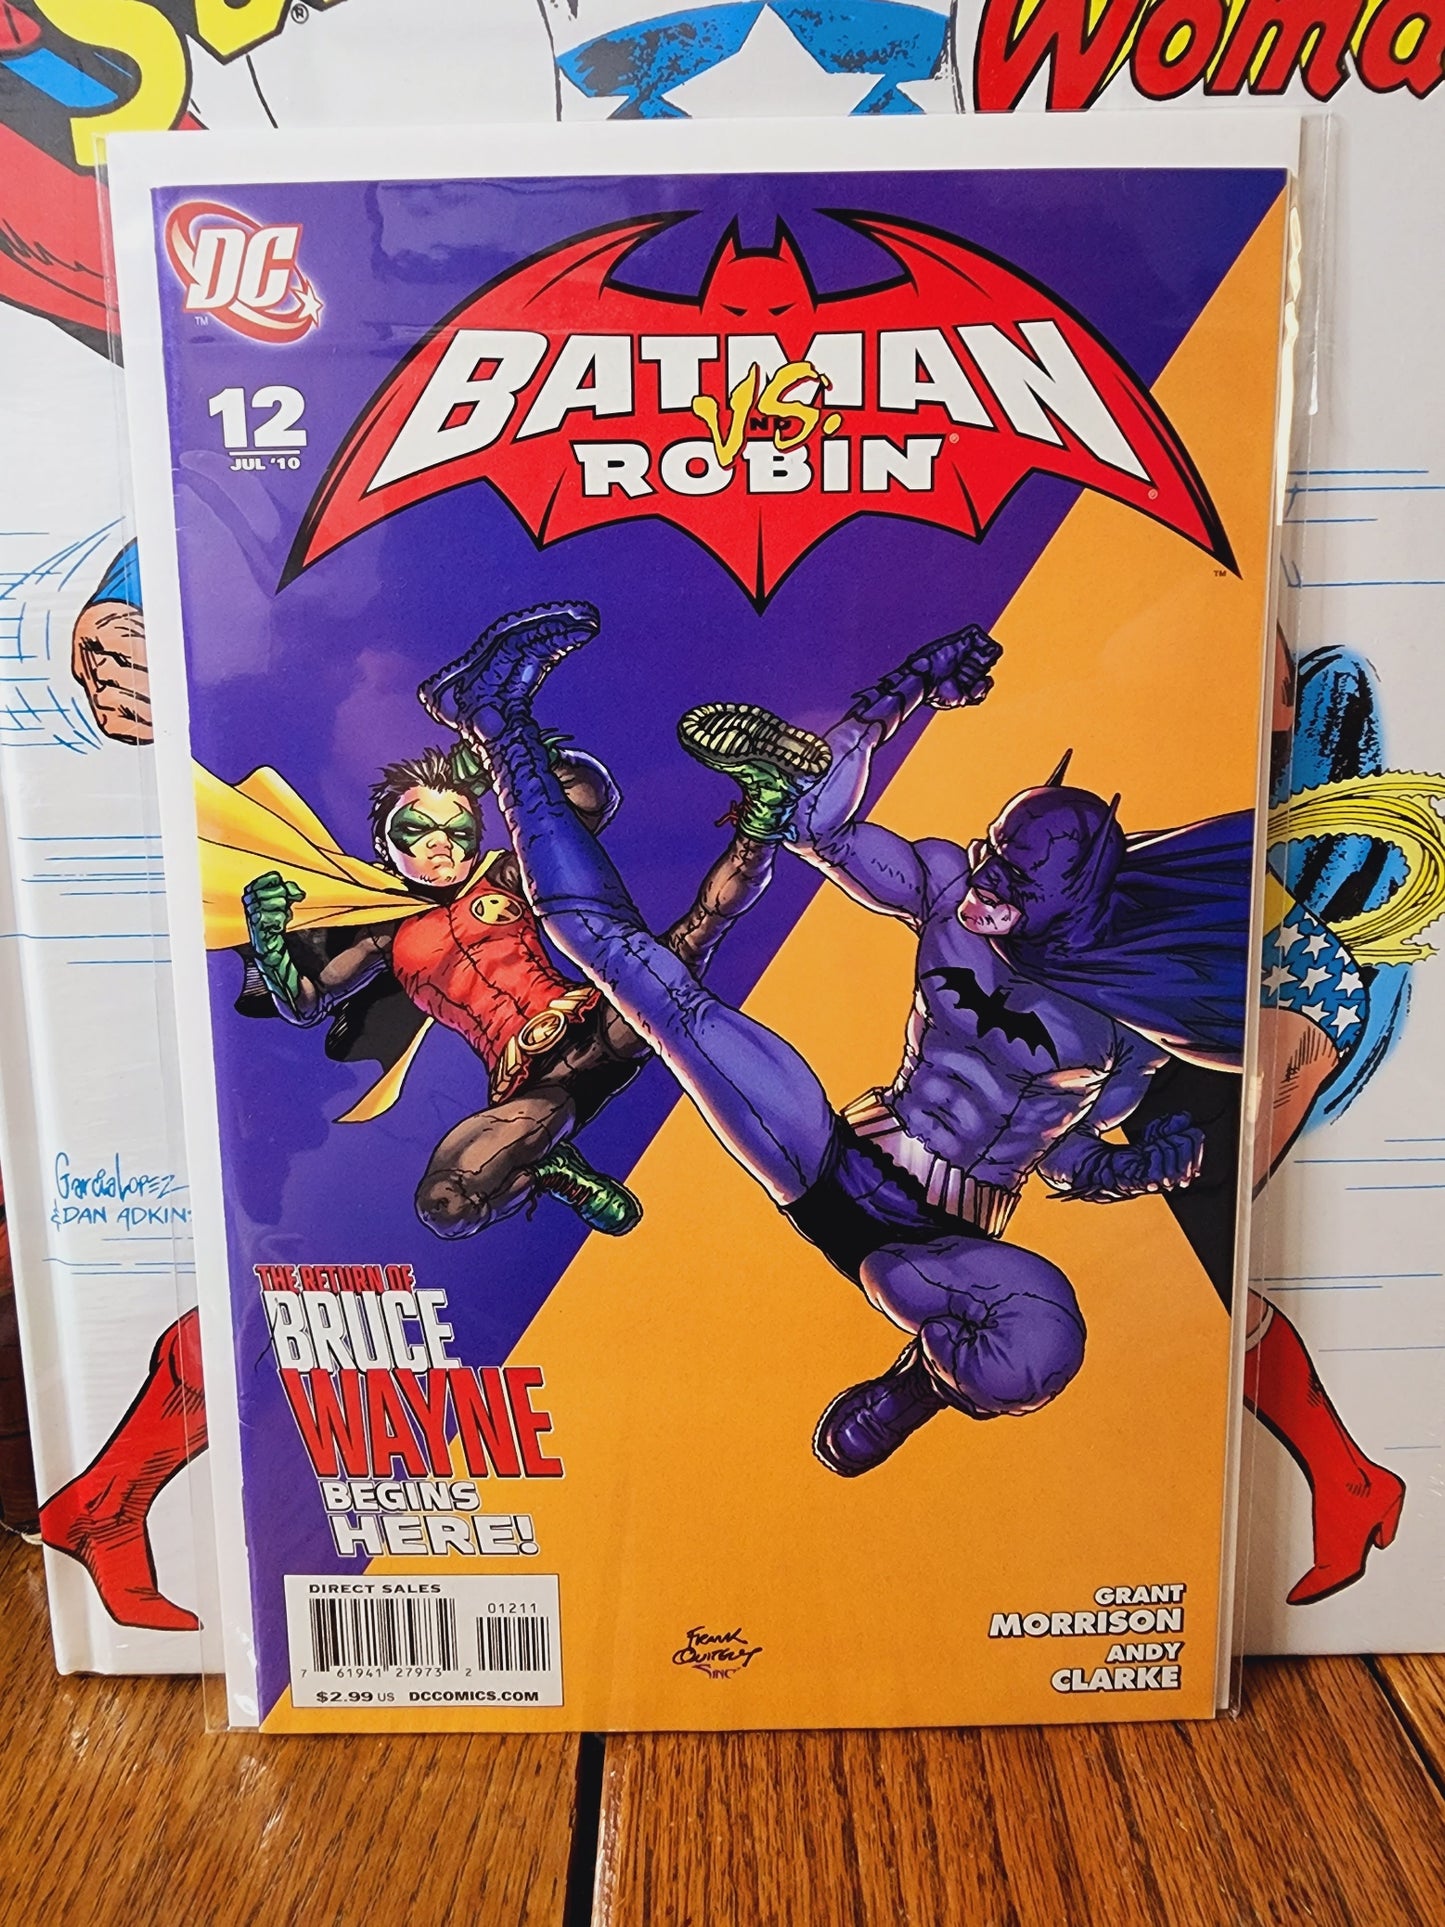 Batman & Robin (Vol. 1) #12 (VF+)